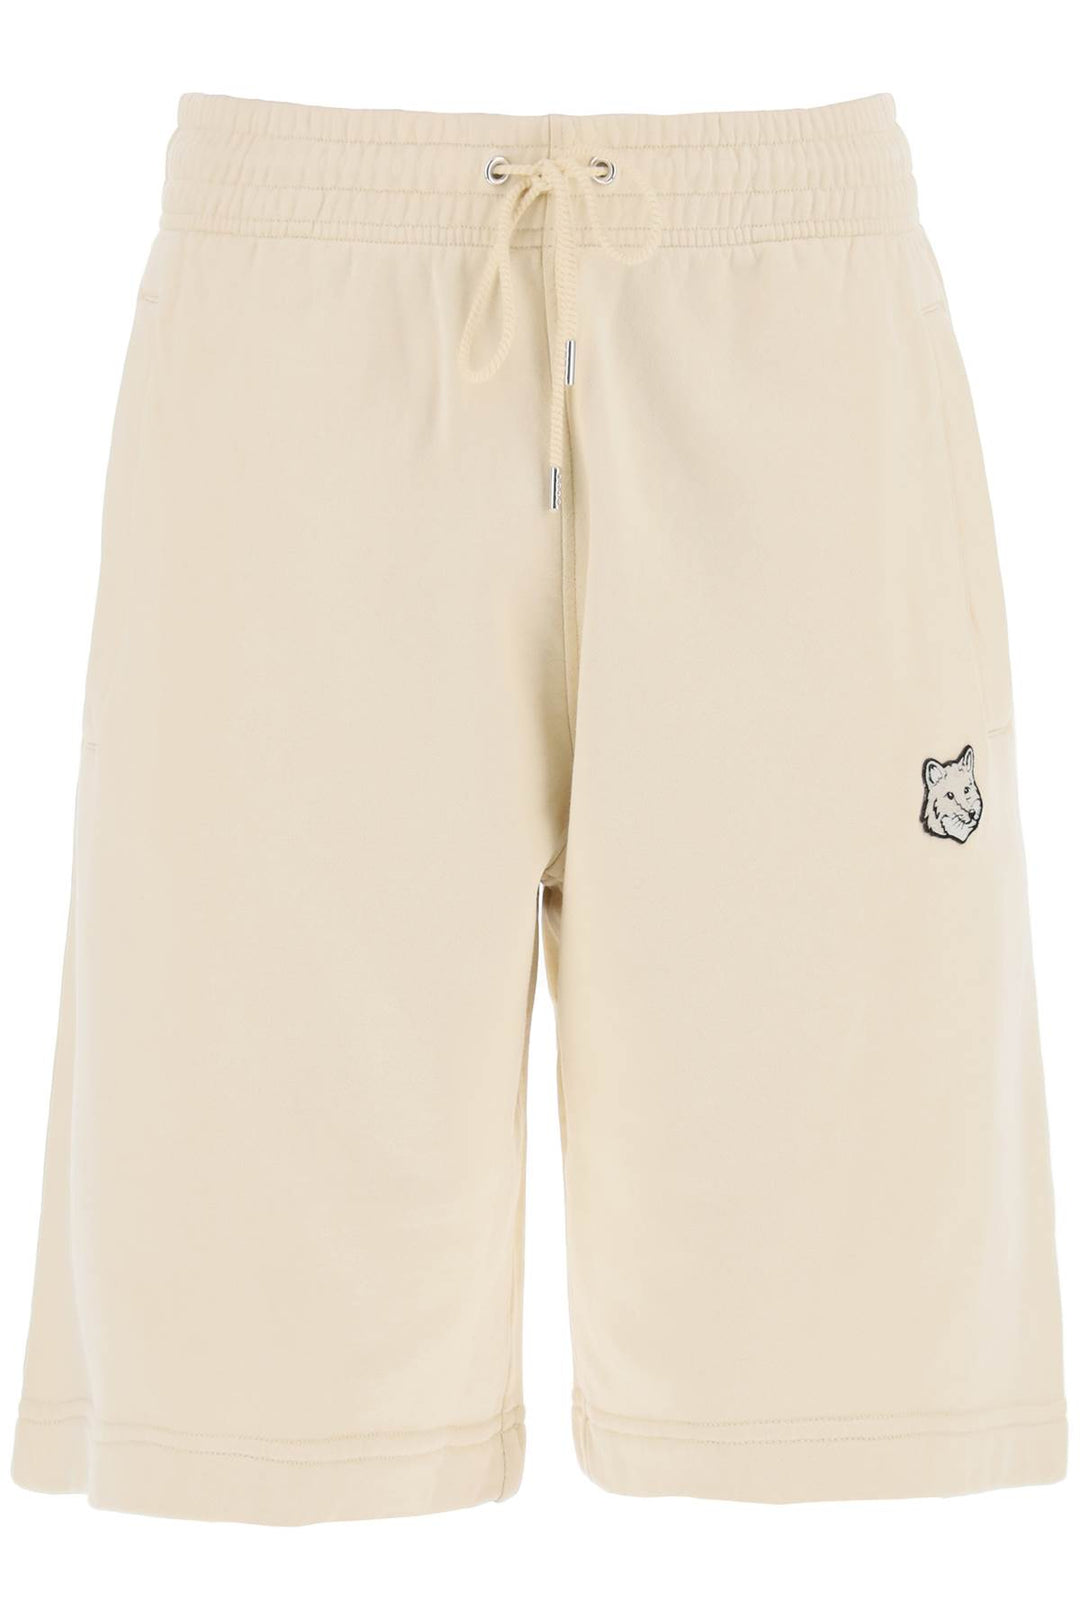 Maison kitsune "oversized sporty bermuda shorts with bold-0